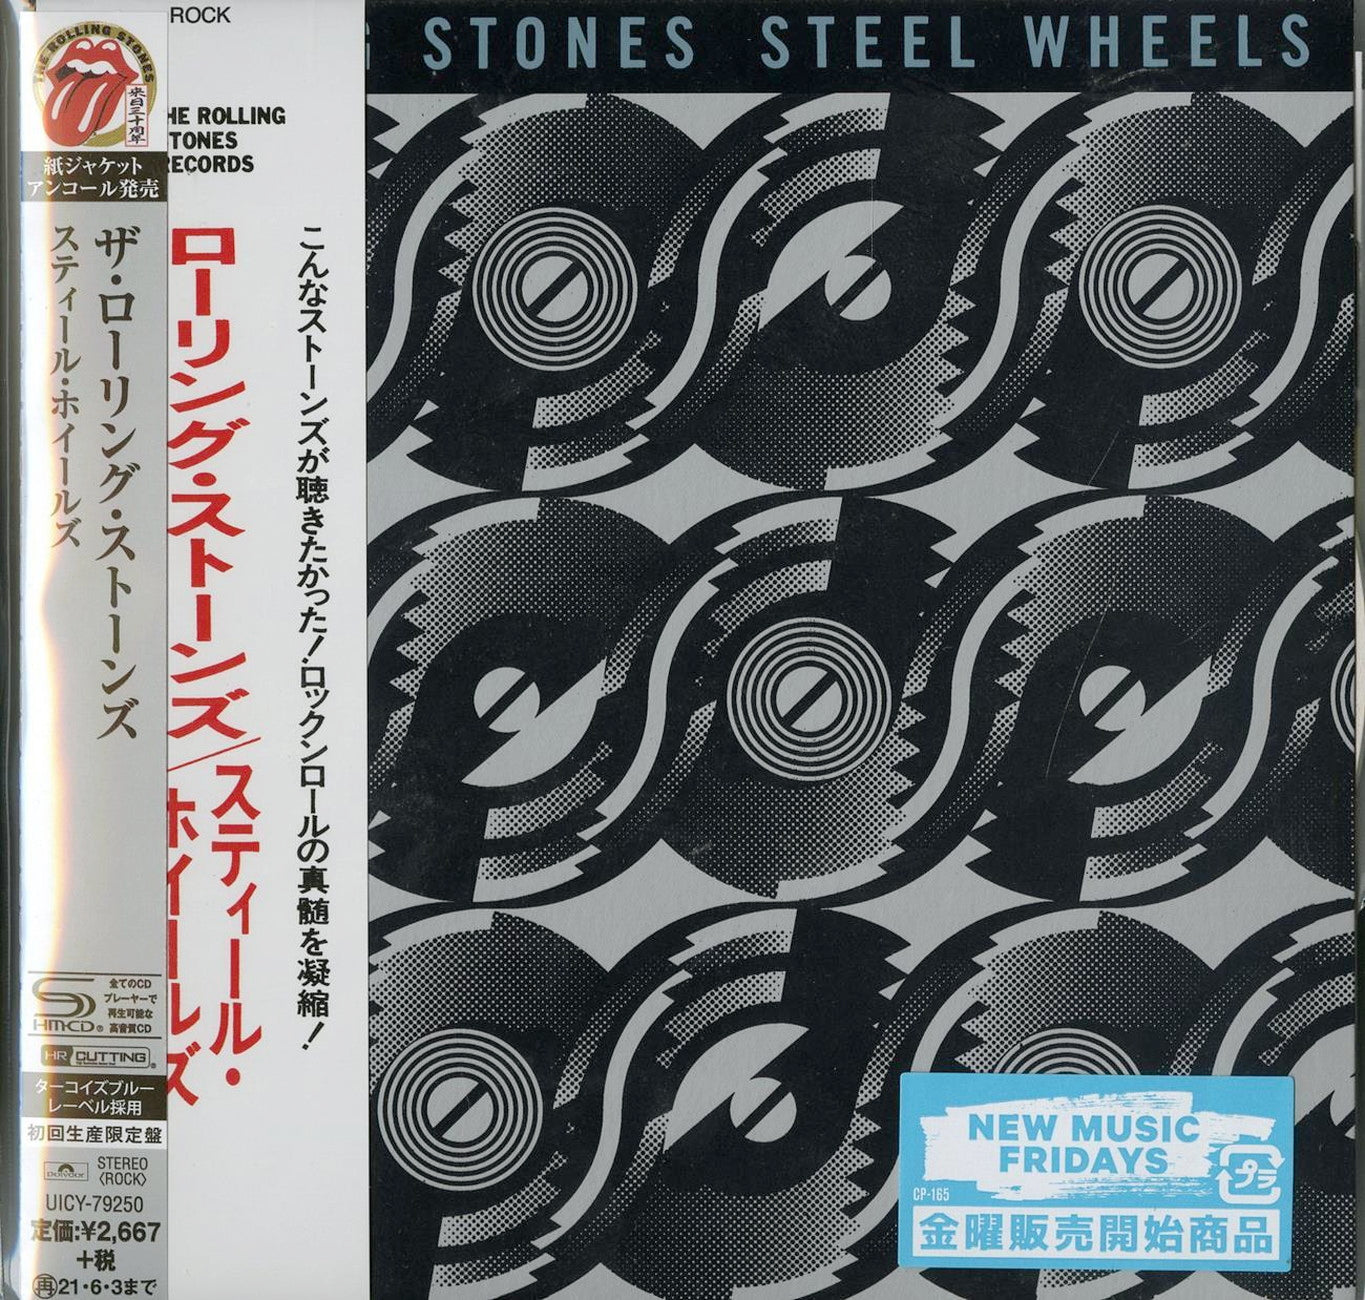 The Rolling Stones - Steel Wheels - Japan Mini LP SHM-CD Limited